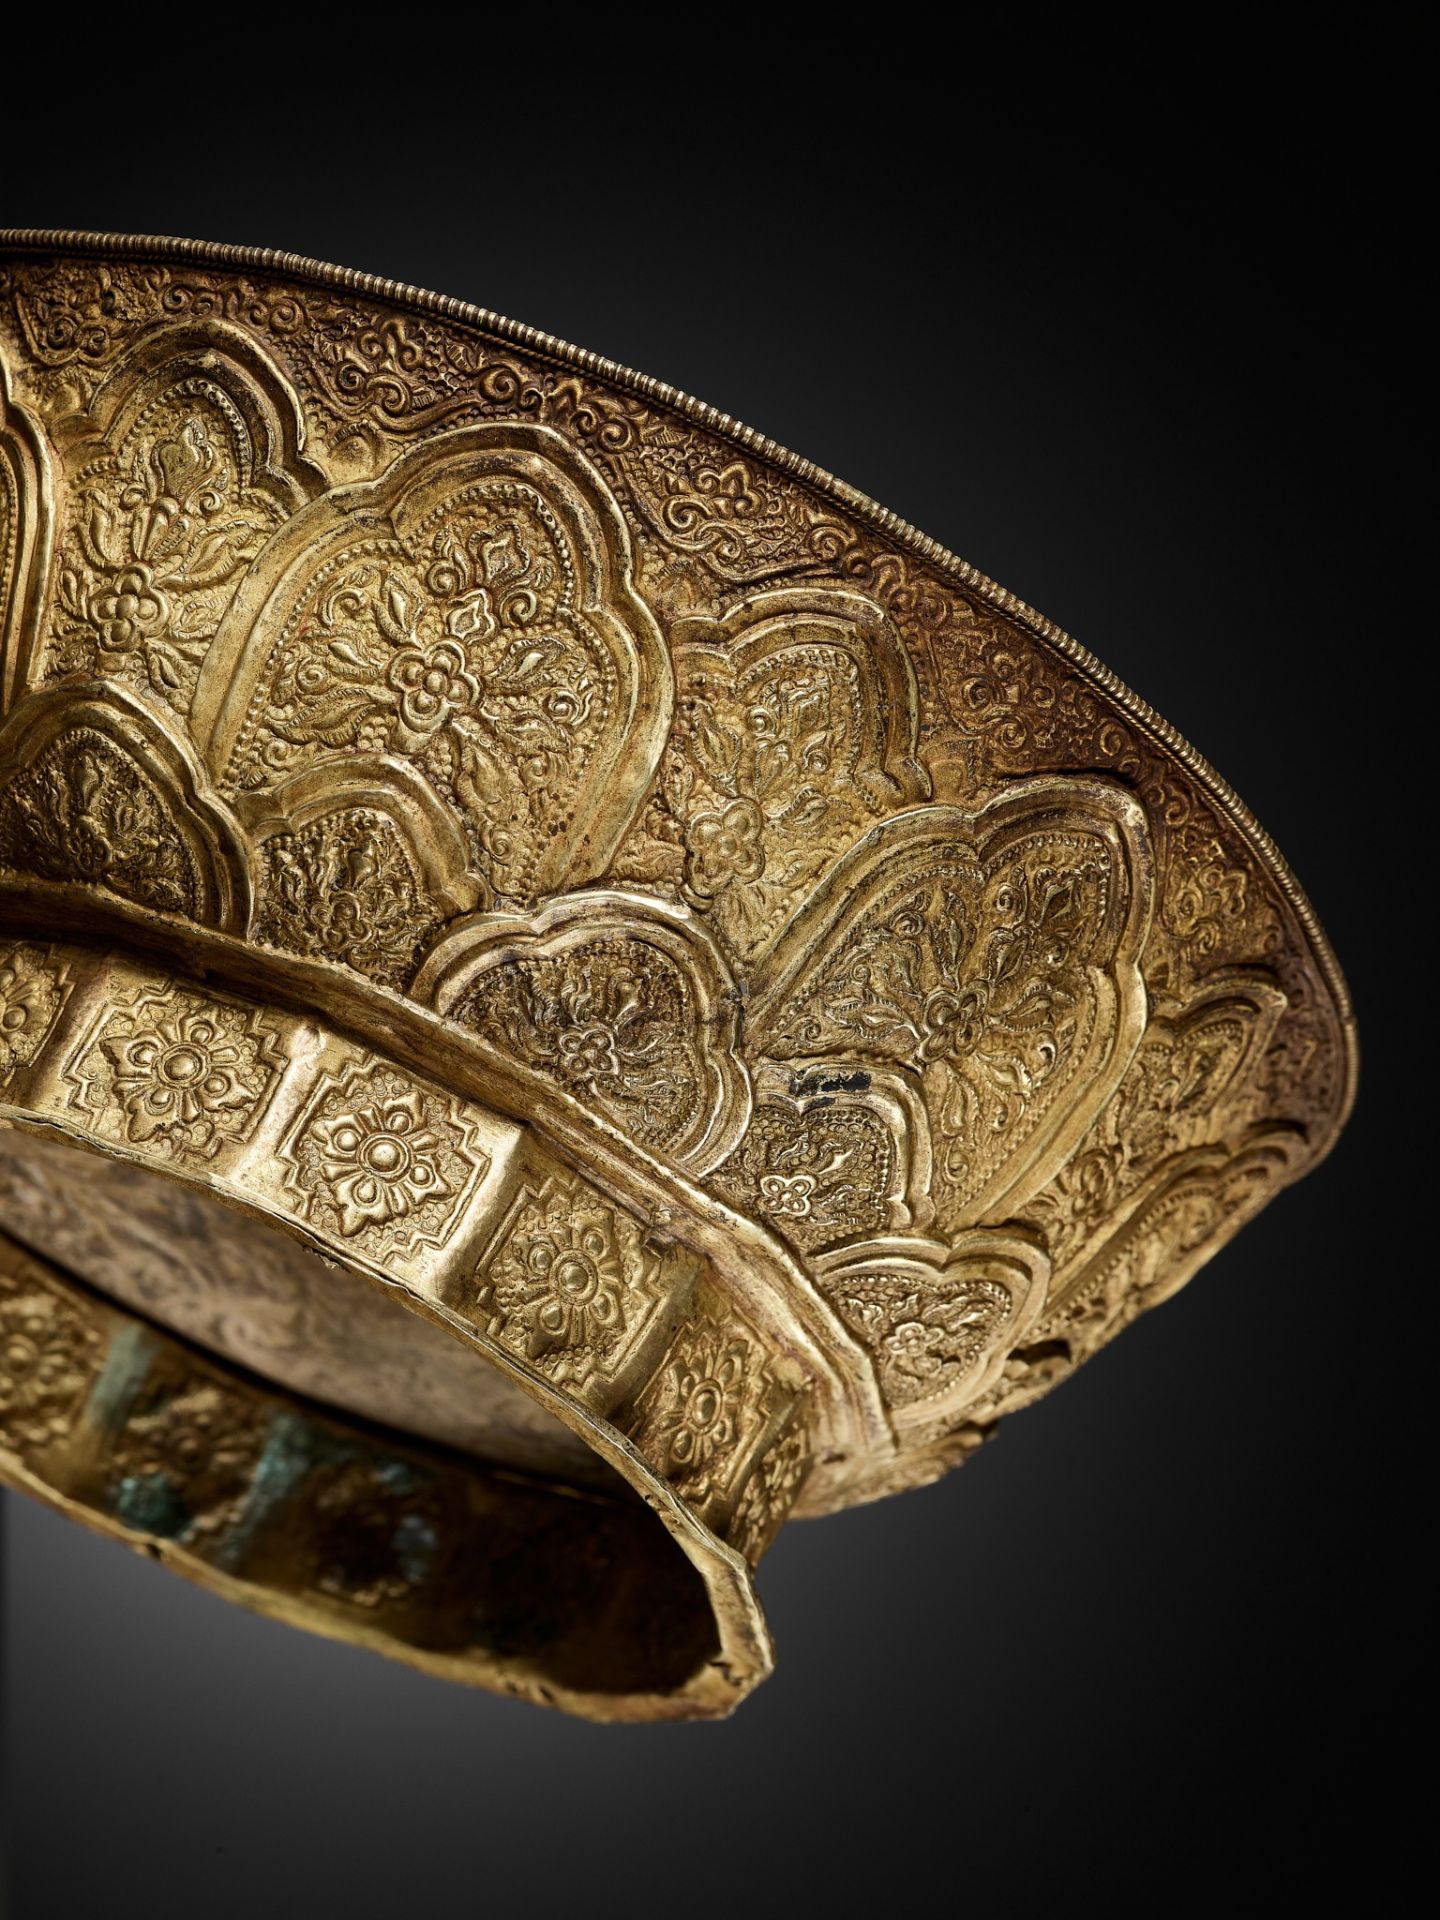 A SILVER-INLAID GOLD REPOUSSÉ BOWL DEPICTING GARUDA, VIETNAM,FORMER KINGDOMS OF CHAMPA,CIRCA 10TH C. - Image 8 of 18